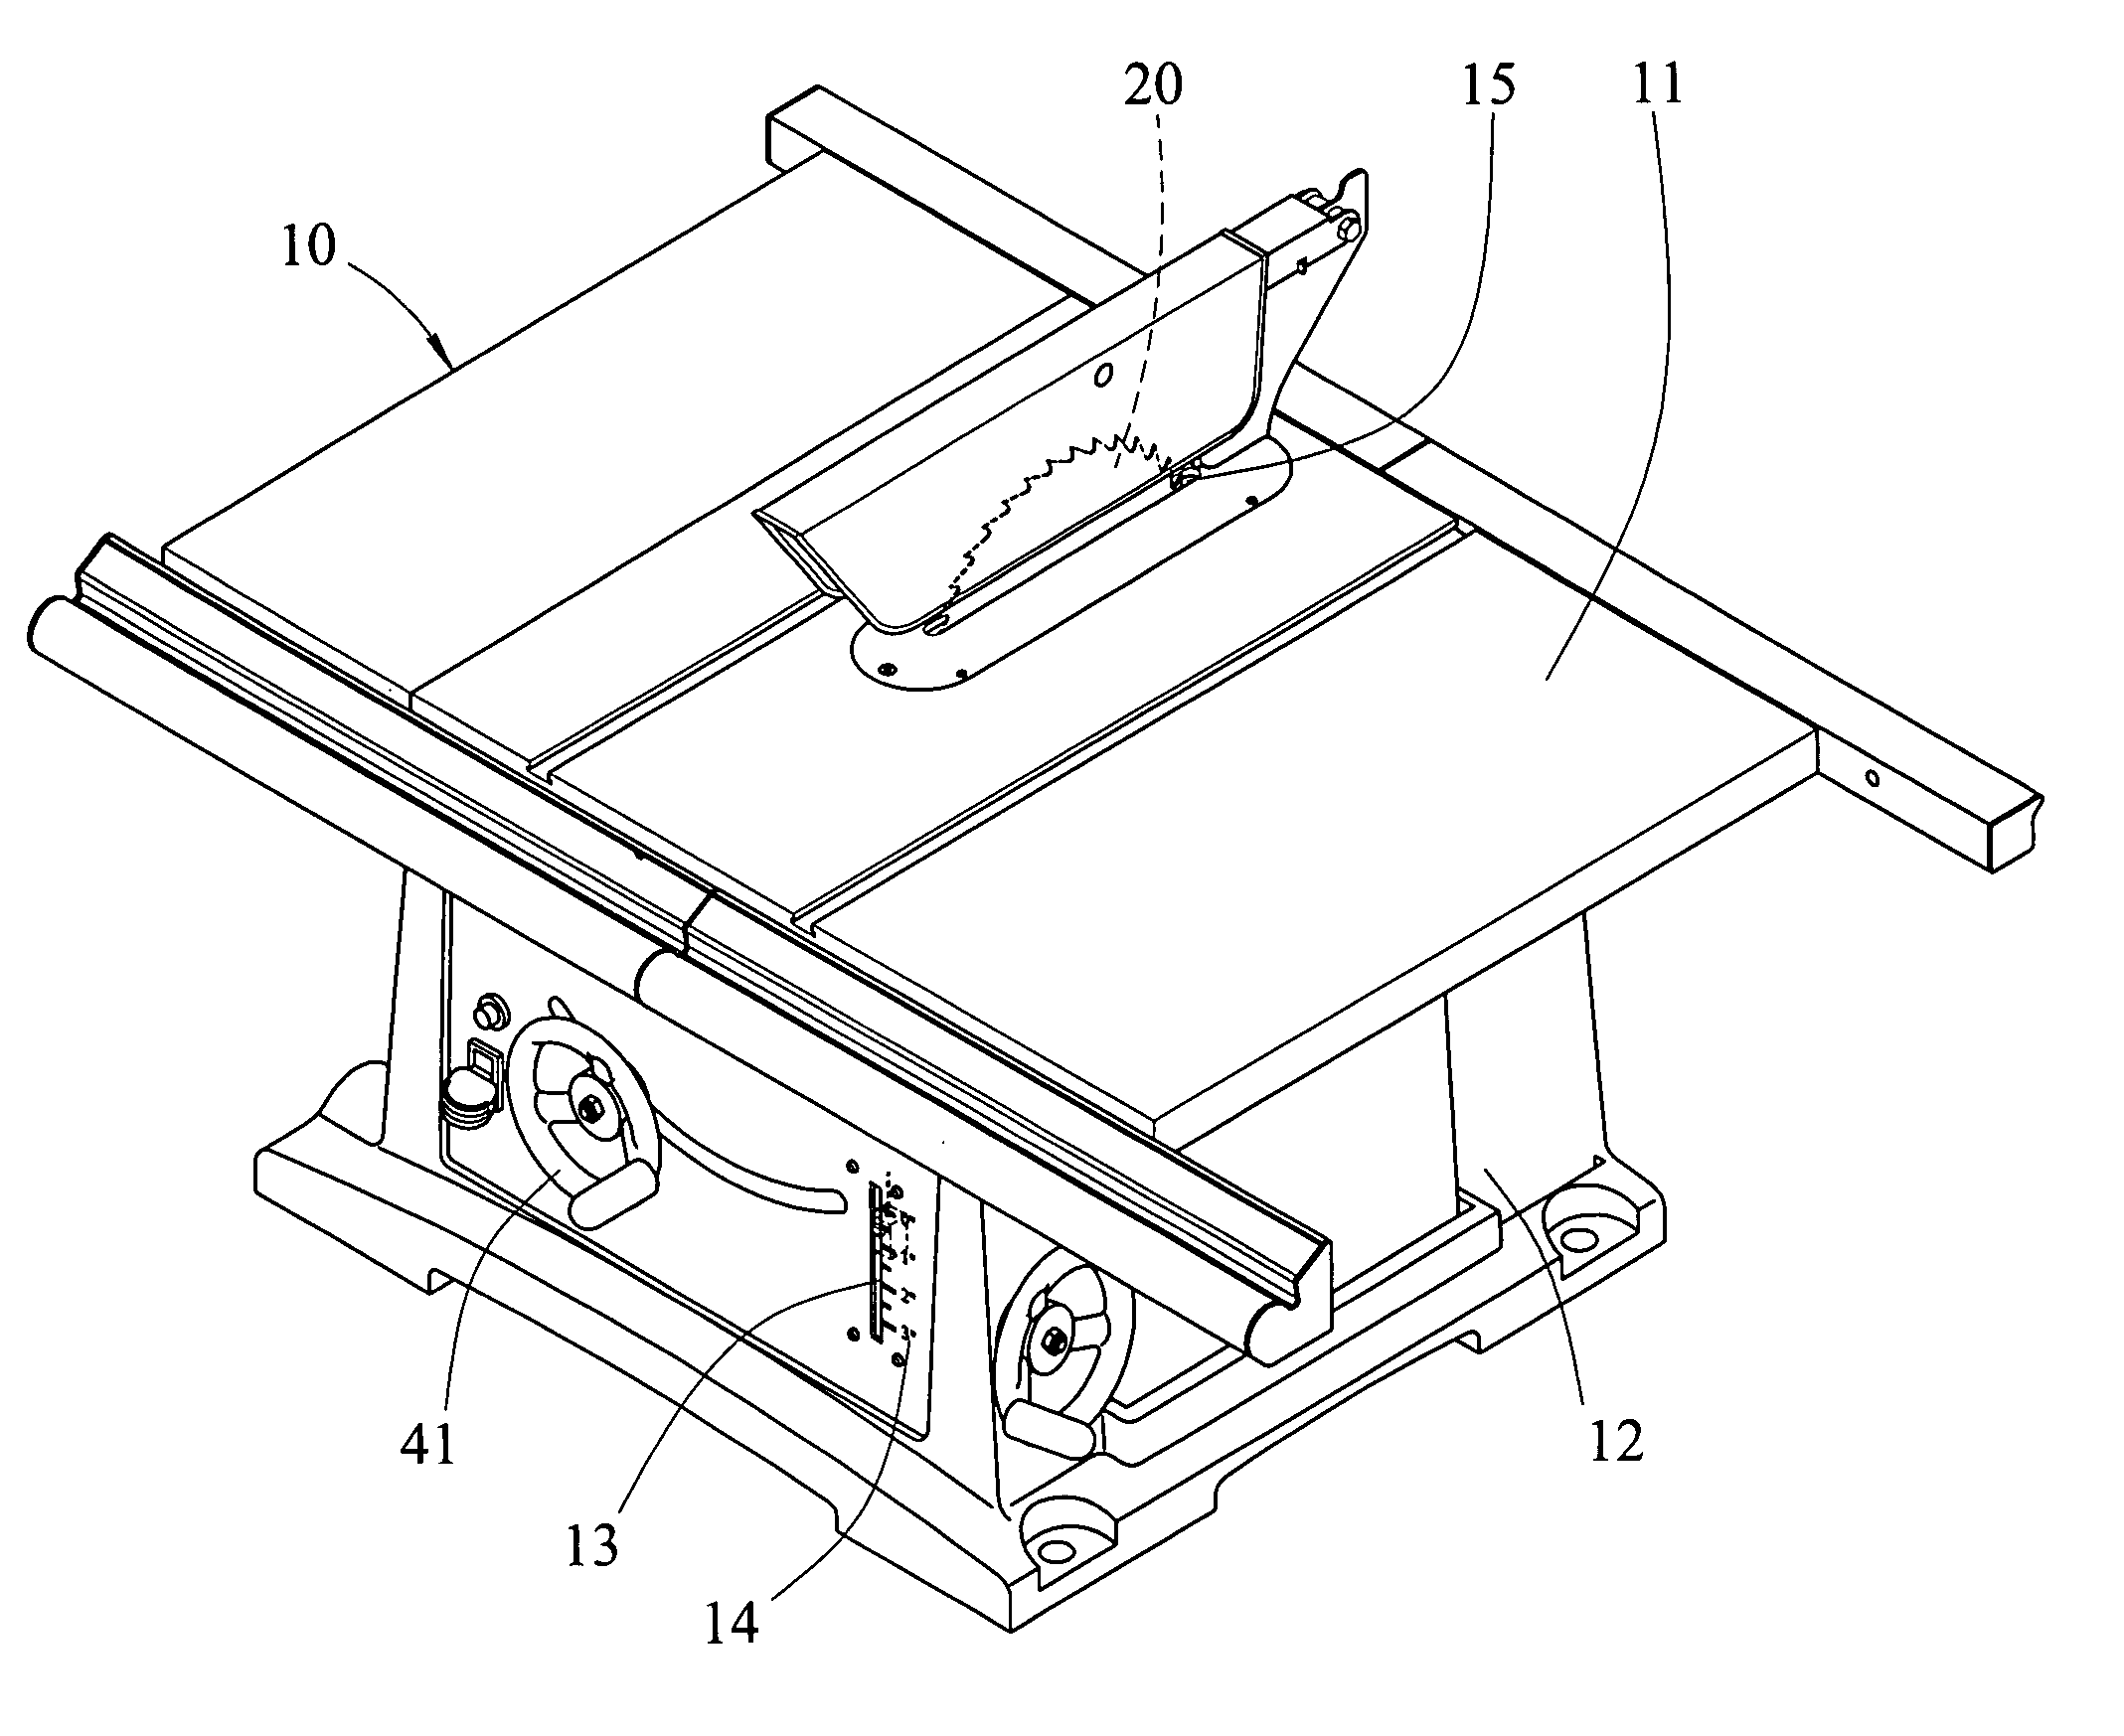 Display device for circular saw